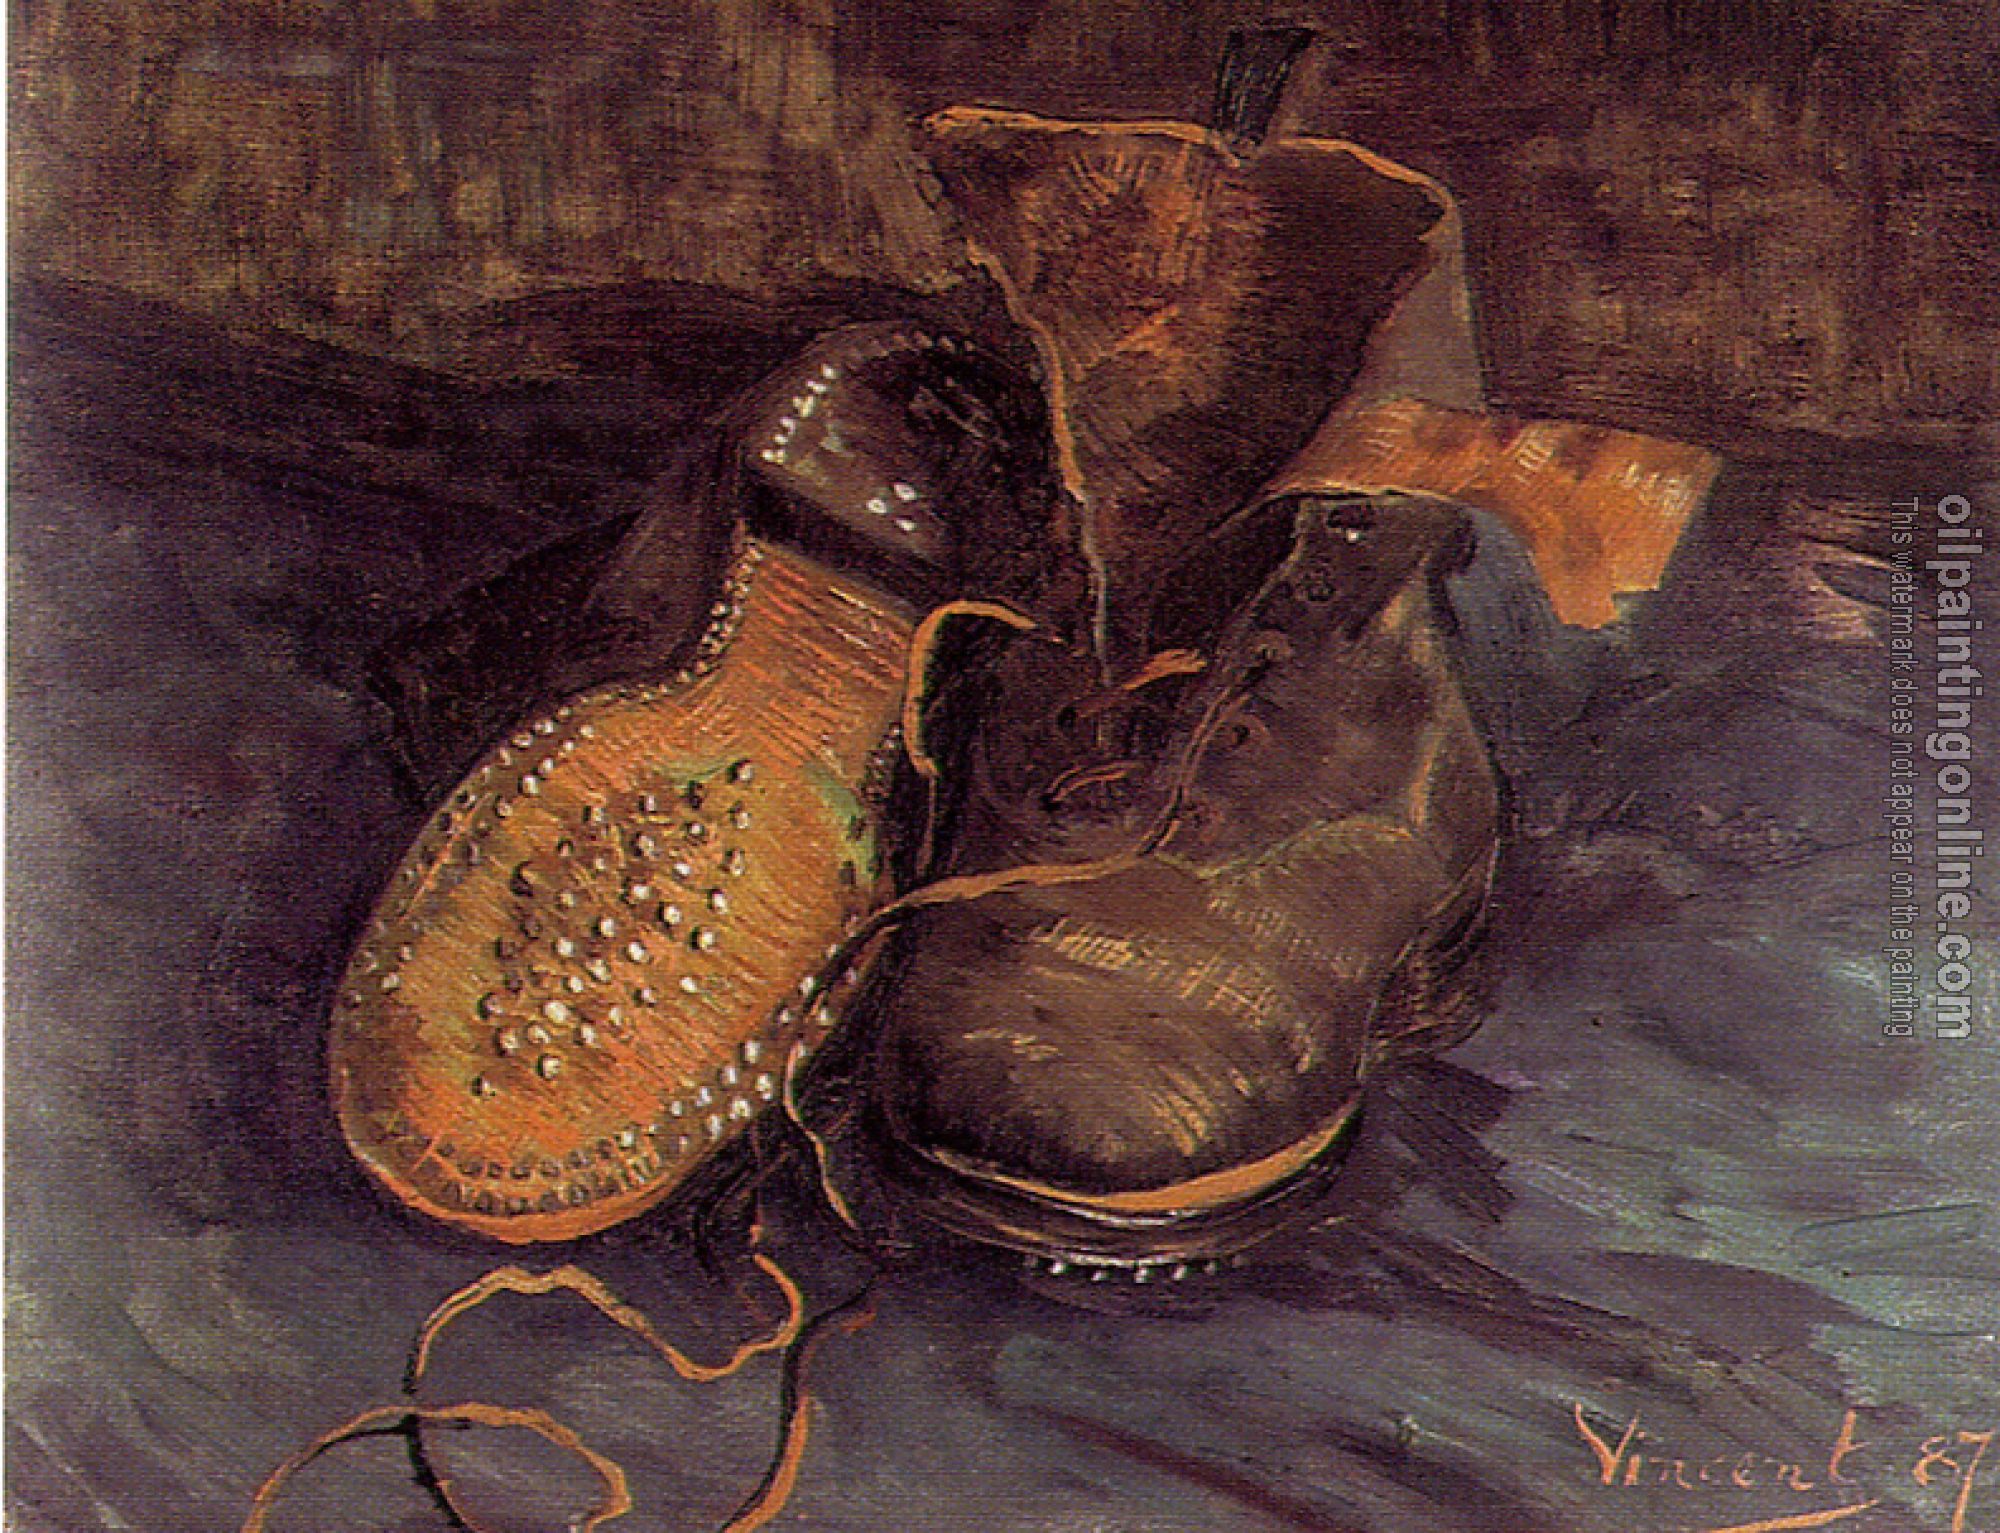 Gogh, Vincent van - A Pair of Shoes,One Shoe Upside Down